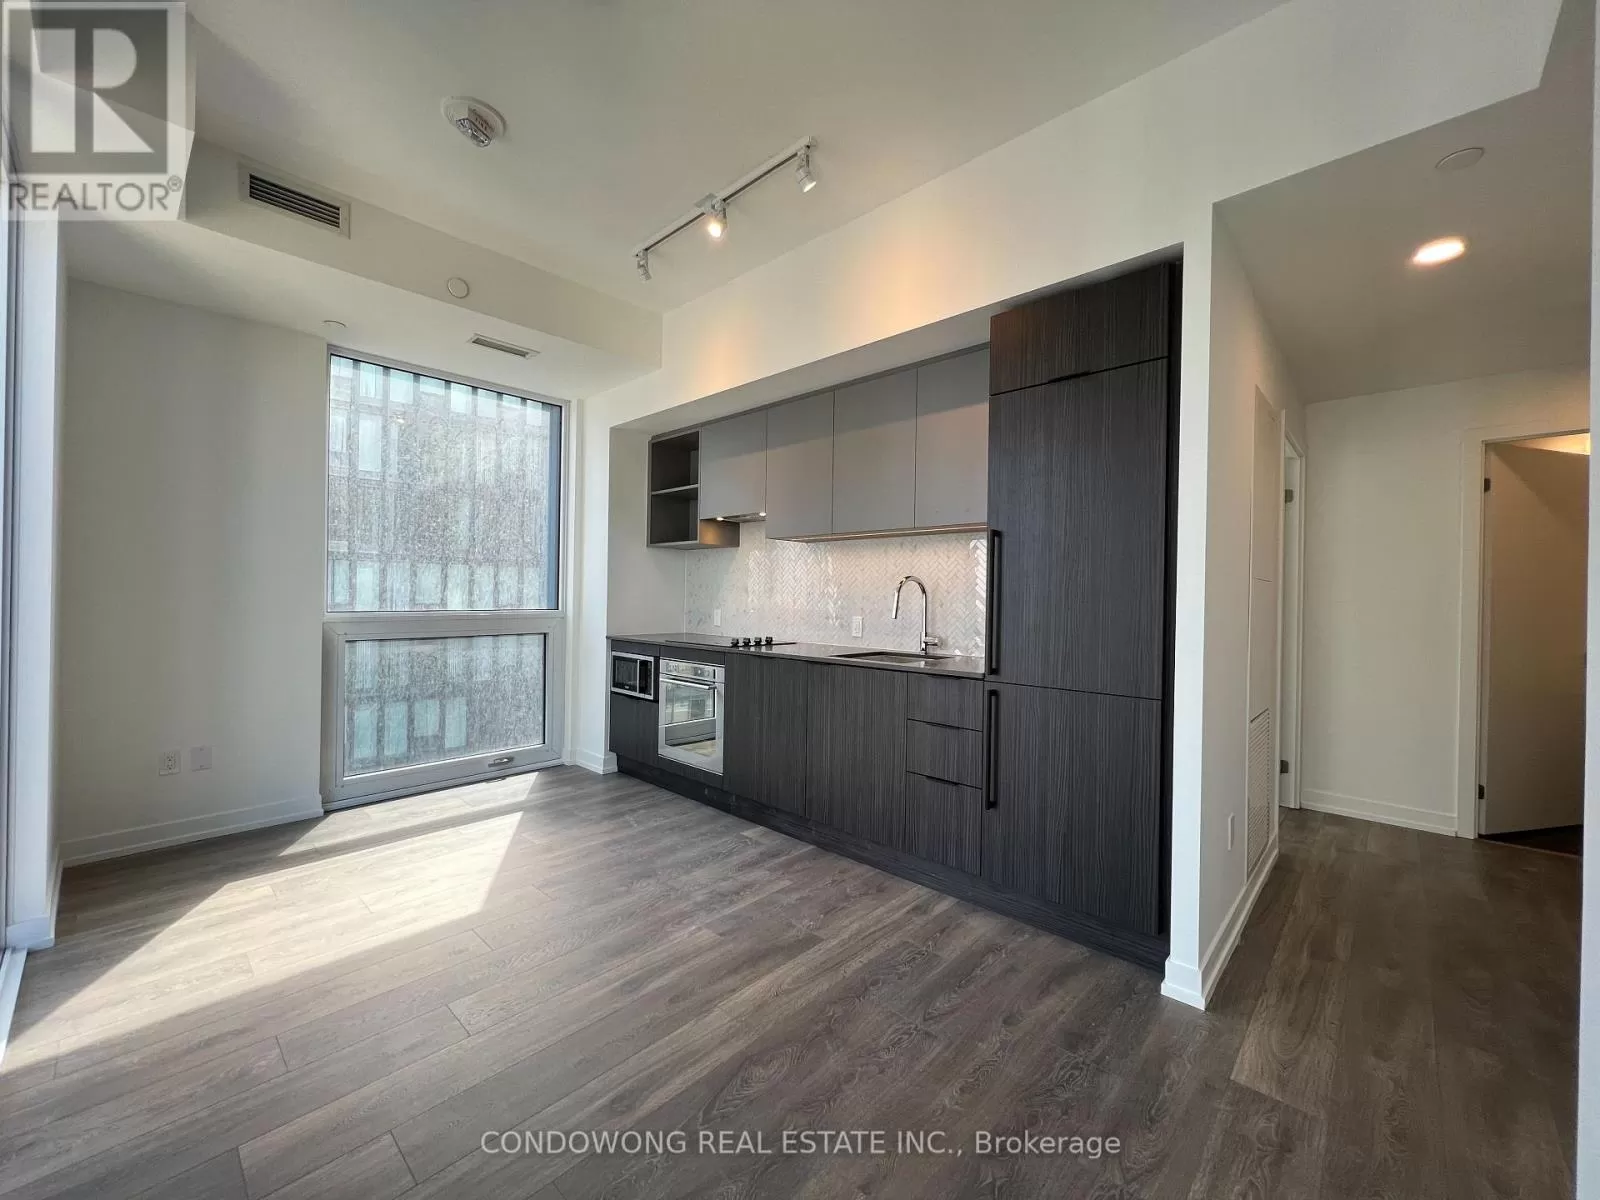 Apartment for rent: 2503 - 82 Dalhousie Street, Toronto, Ontario M5B 0C5